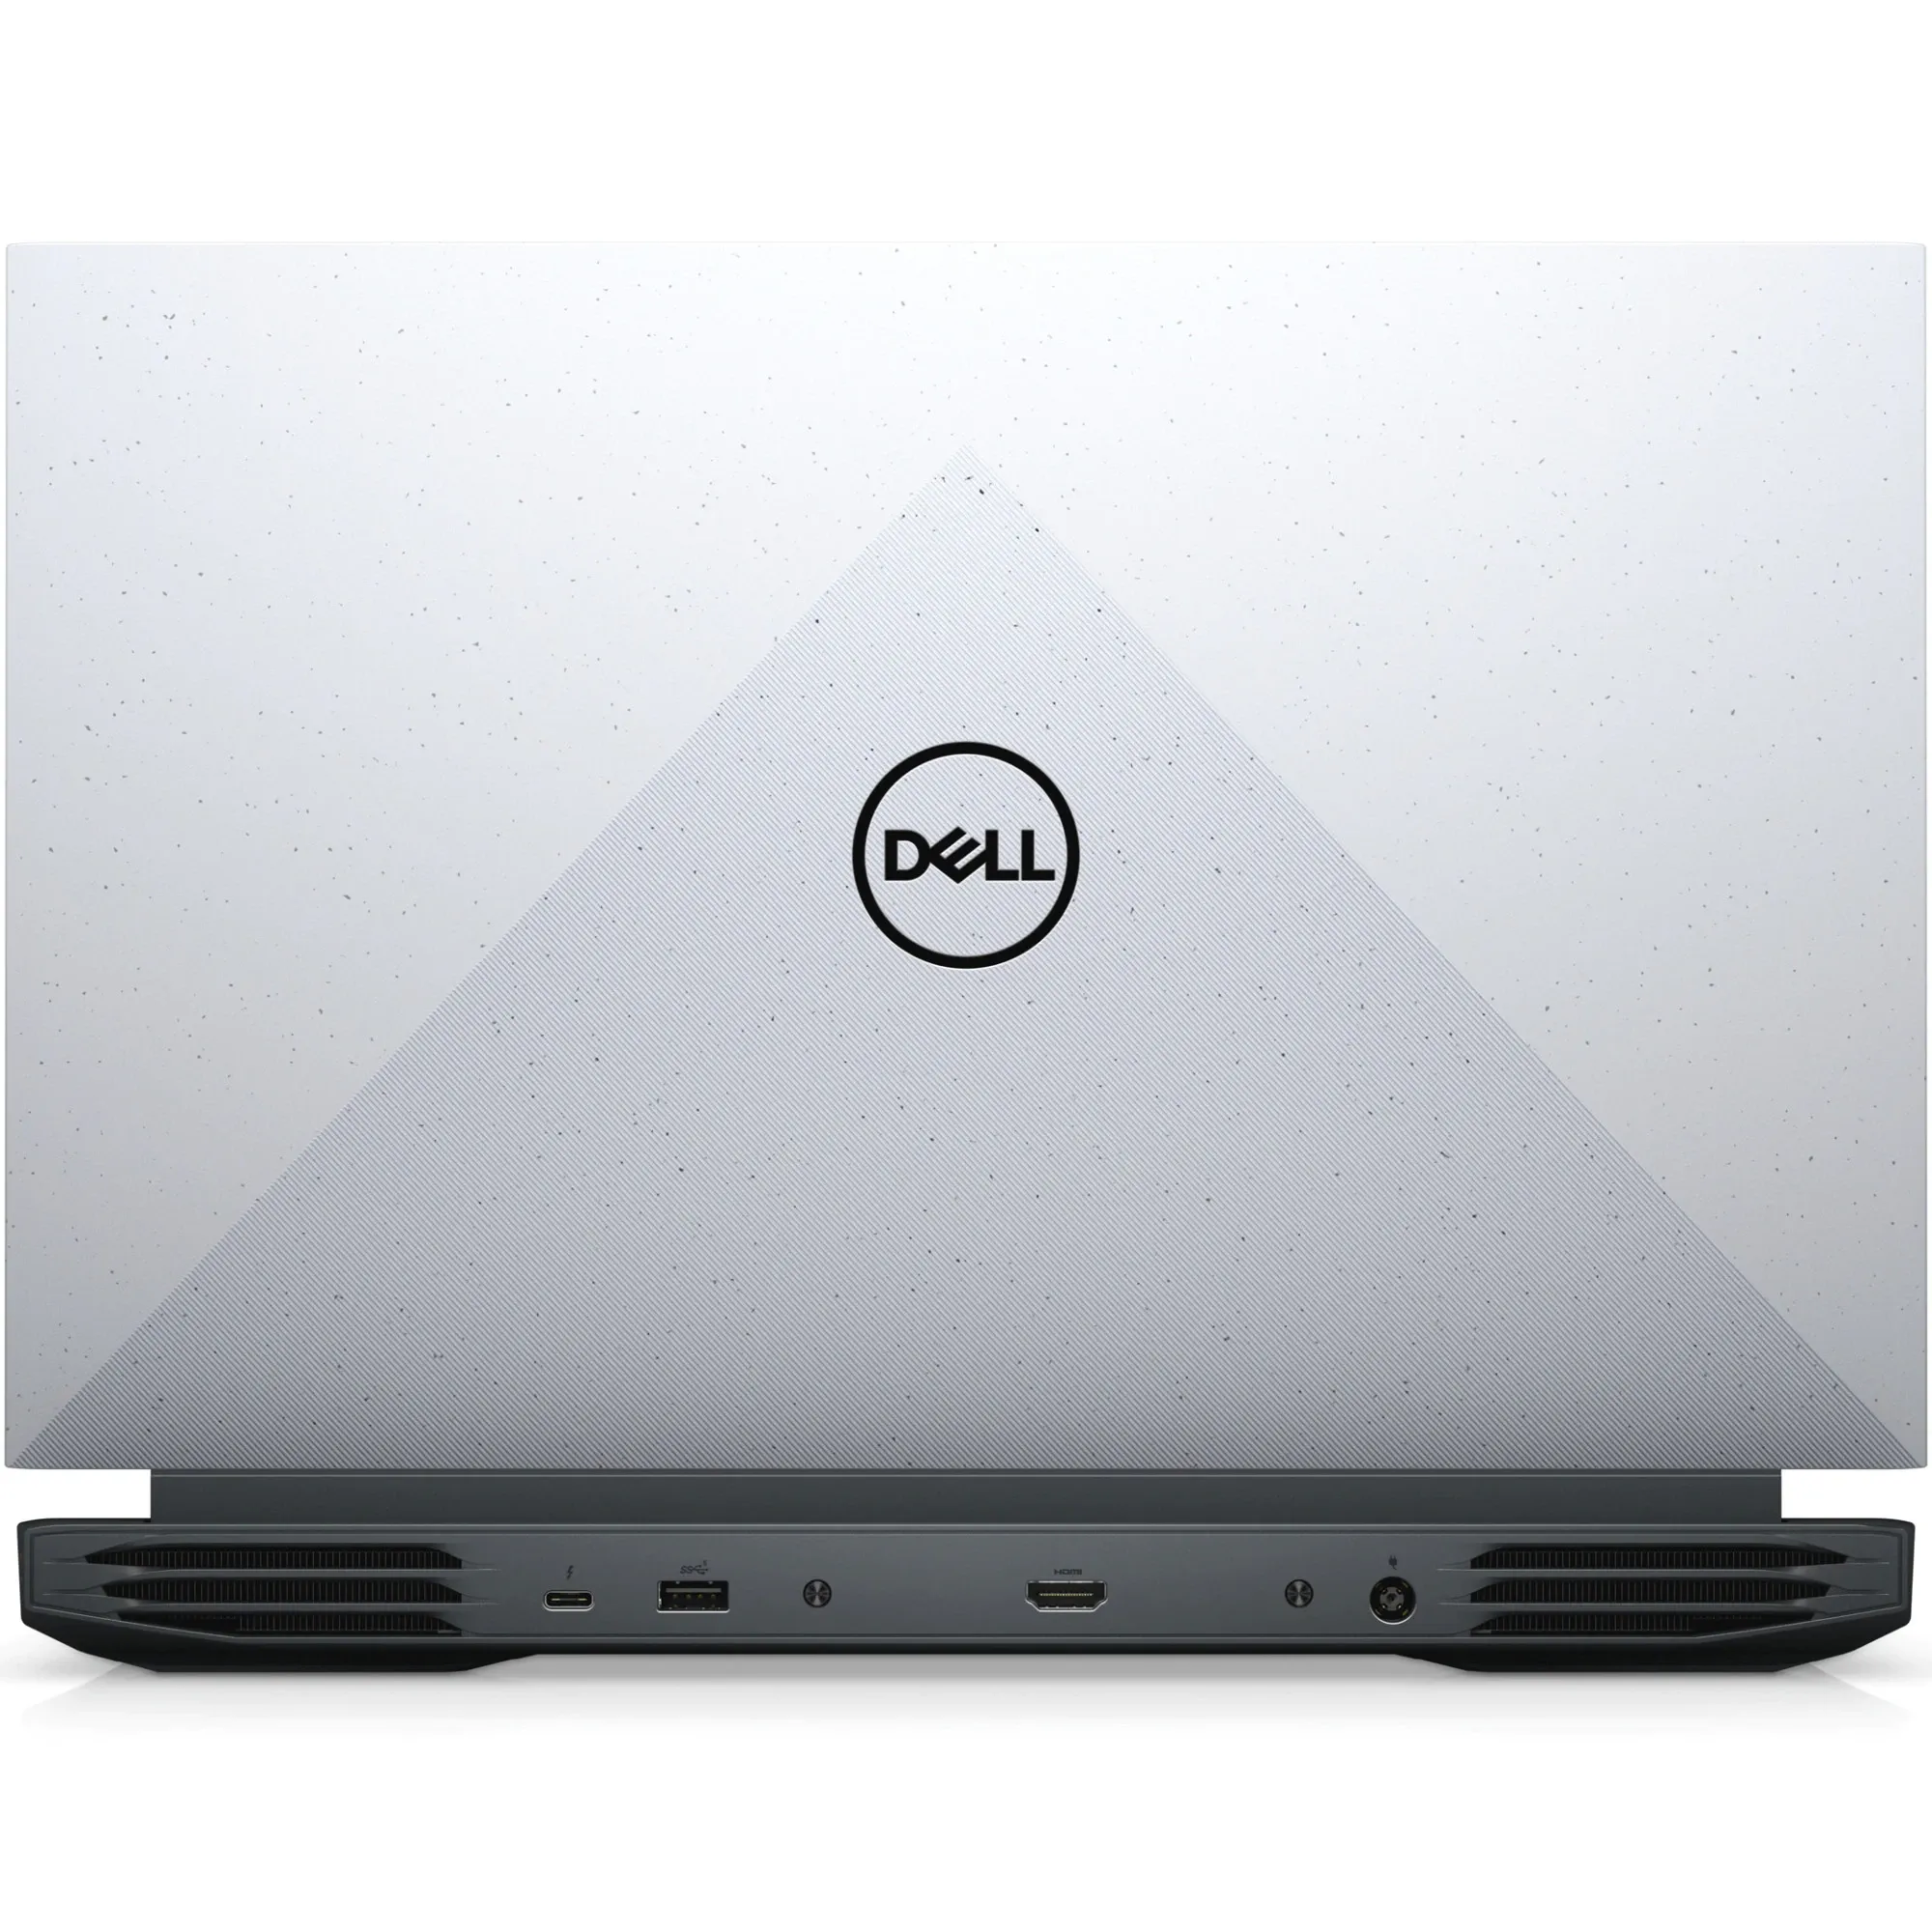 Laptop Gaming Dell Inspiron G5 15 5515 - Mai multa memorie, mai multa distractie